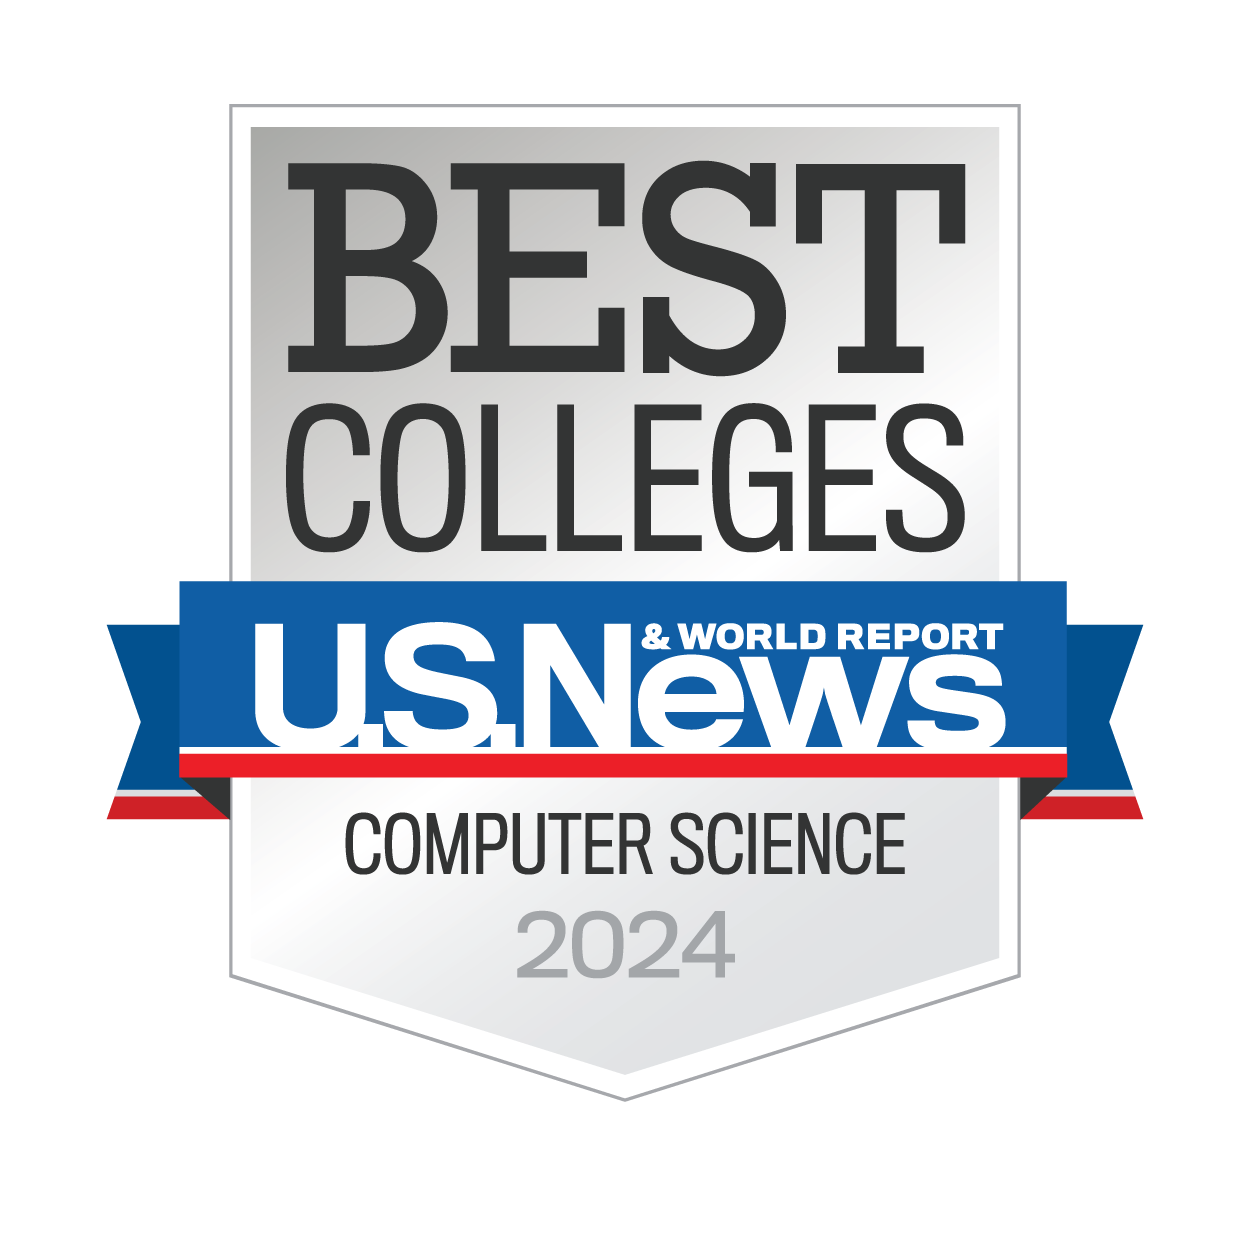 US News Badges-Computer Science 2024